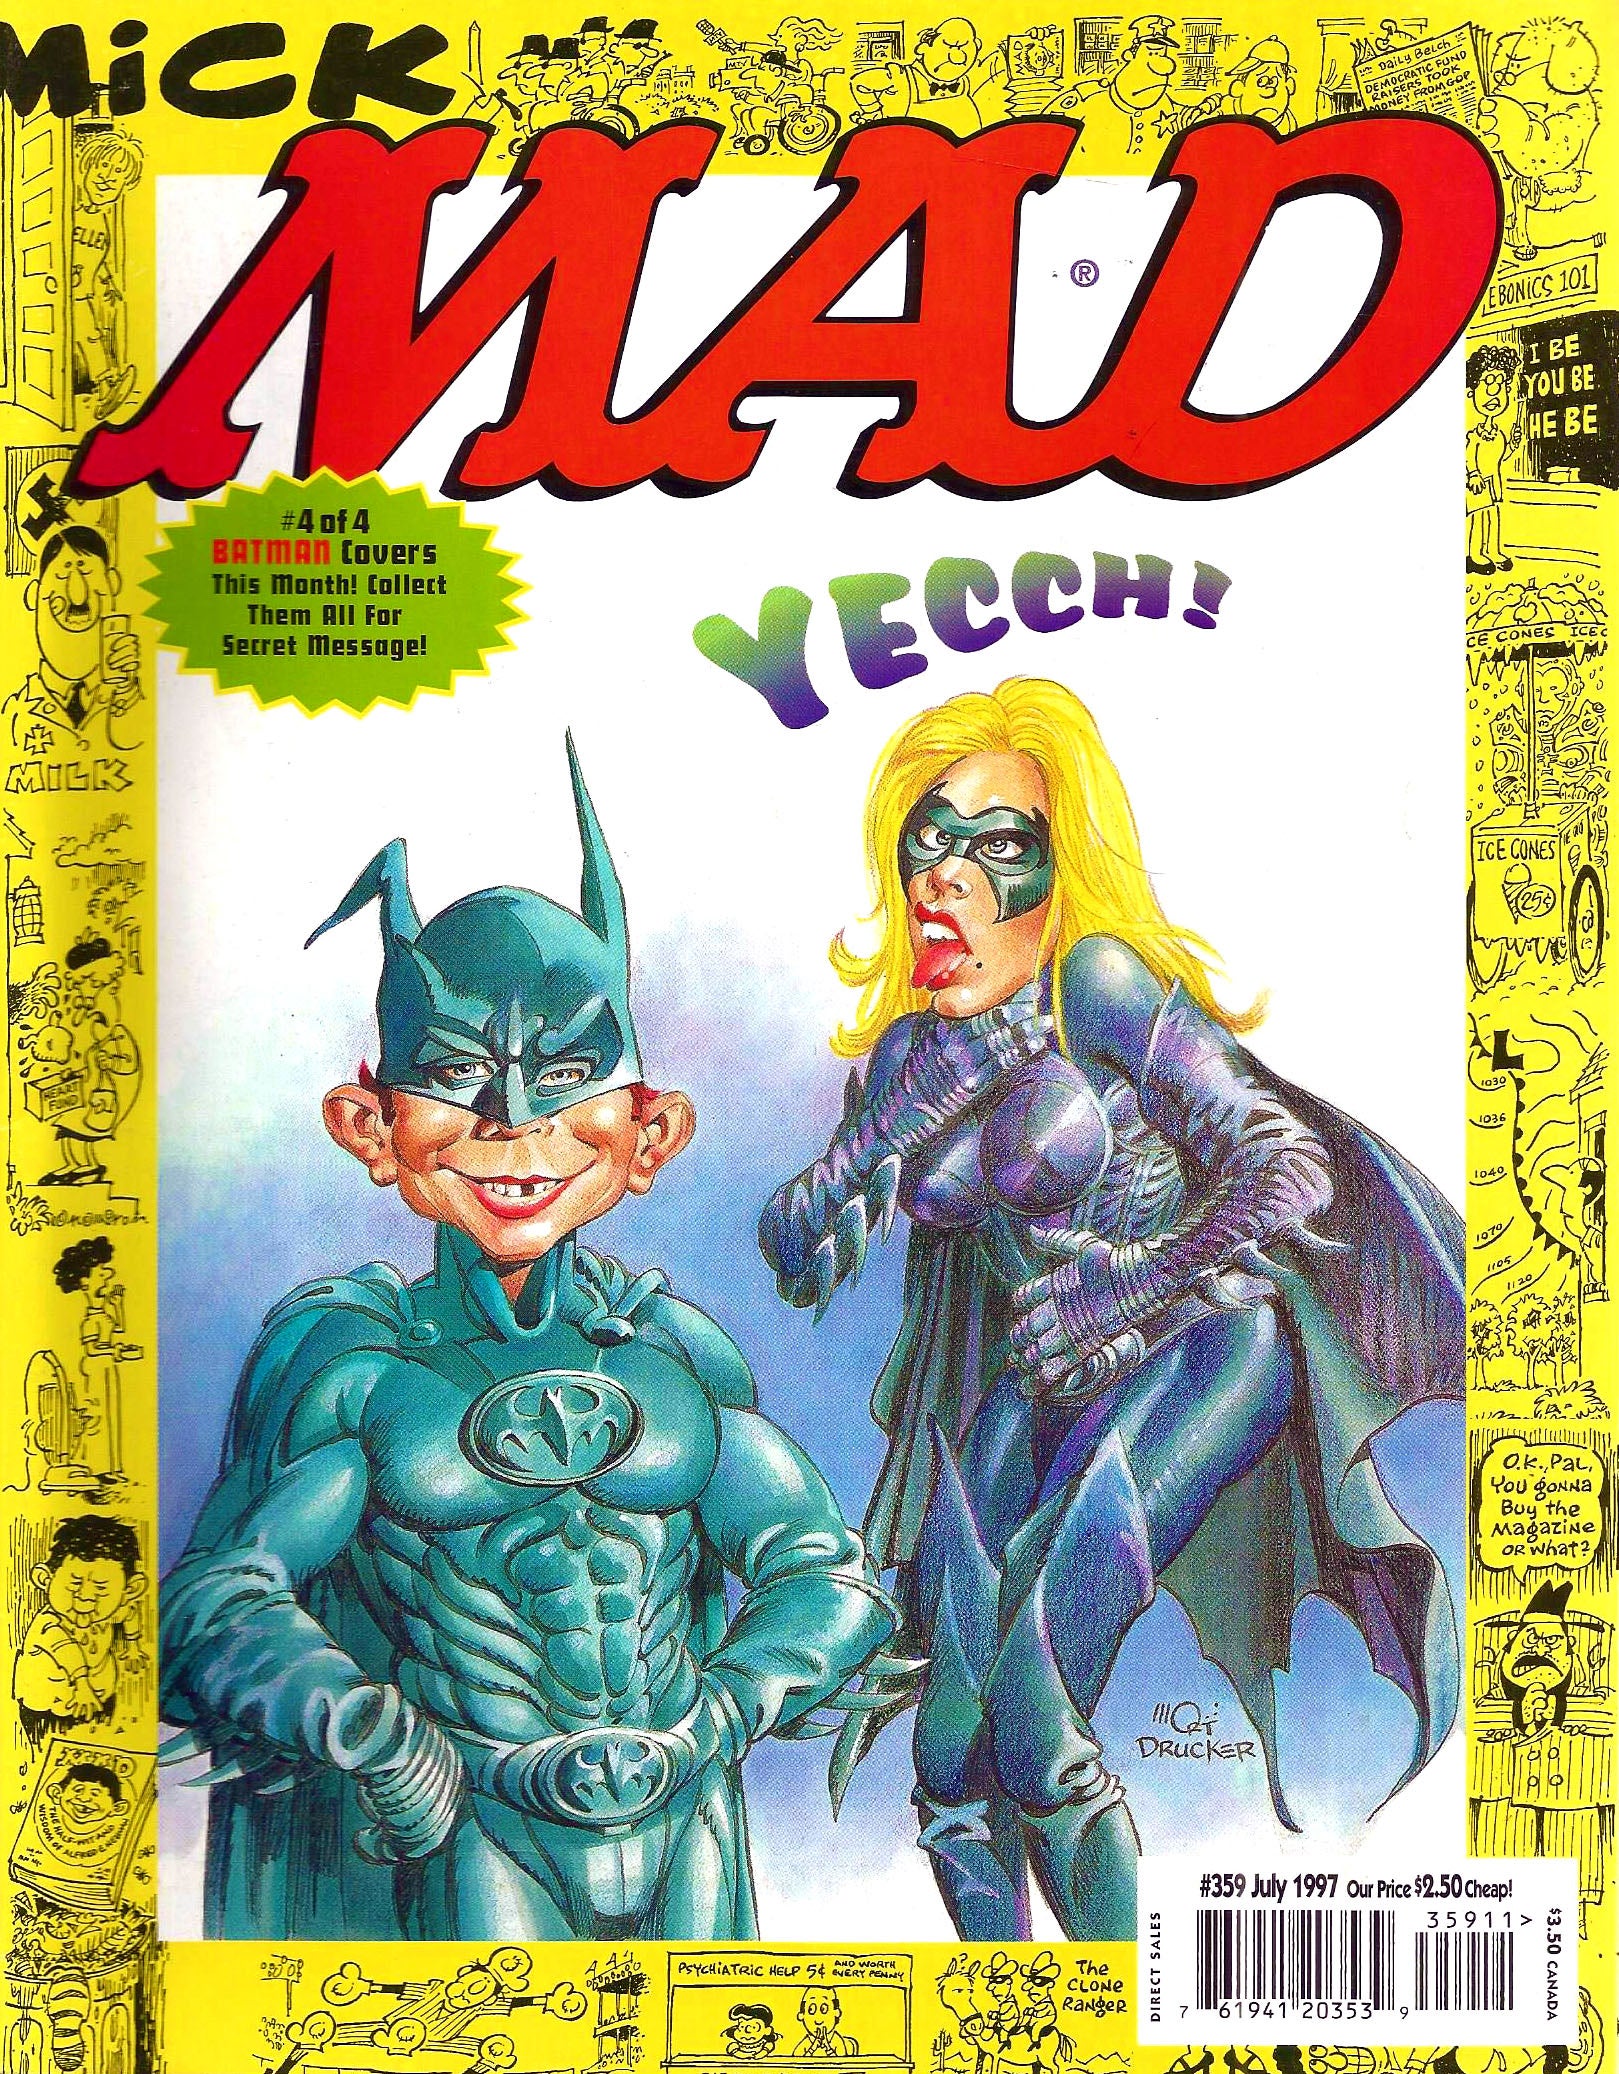 ‘Mad Magazine’ mocks ‘Batman & Robin’ in a July 1997 cover story